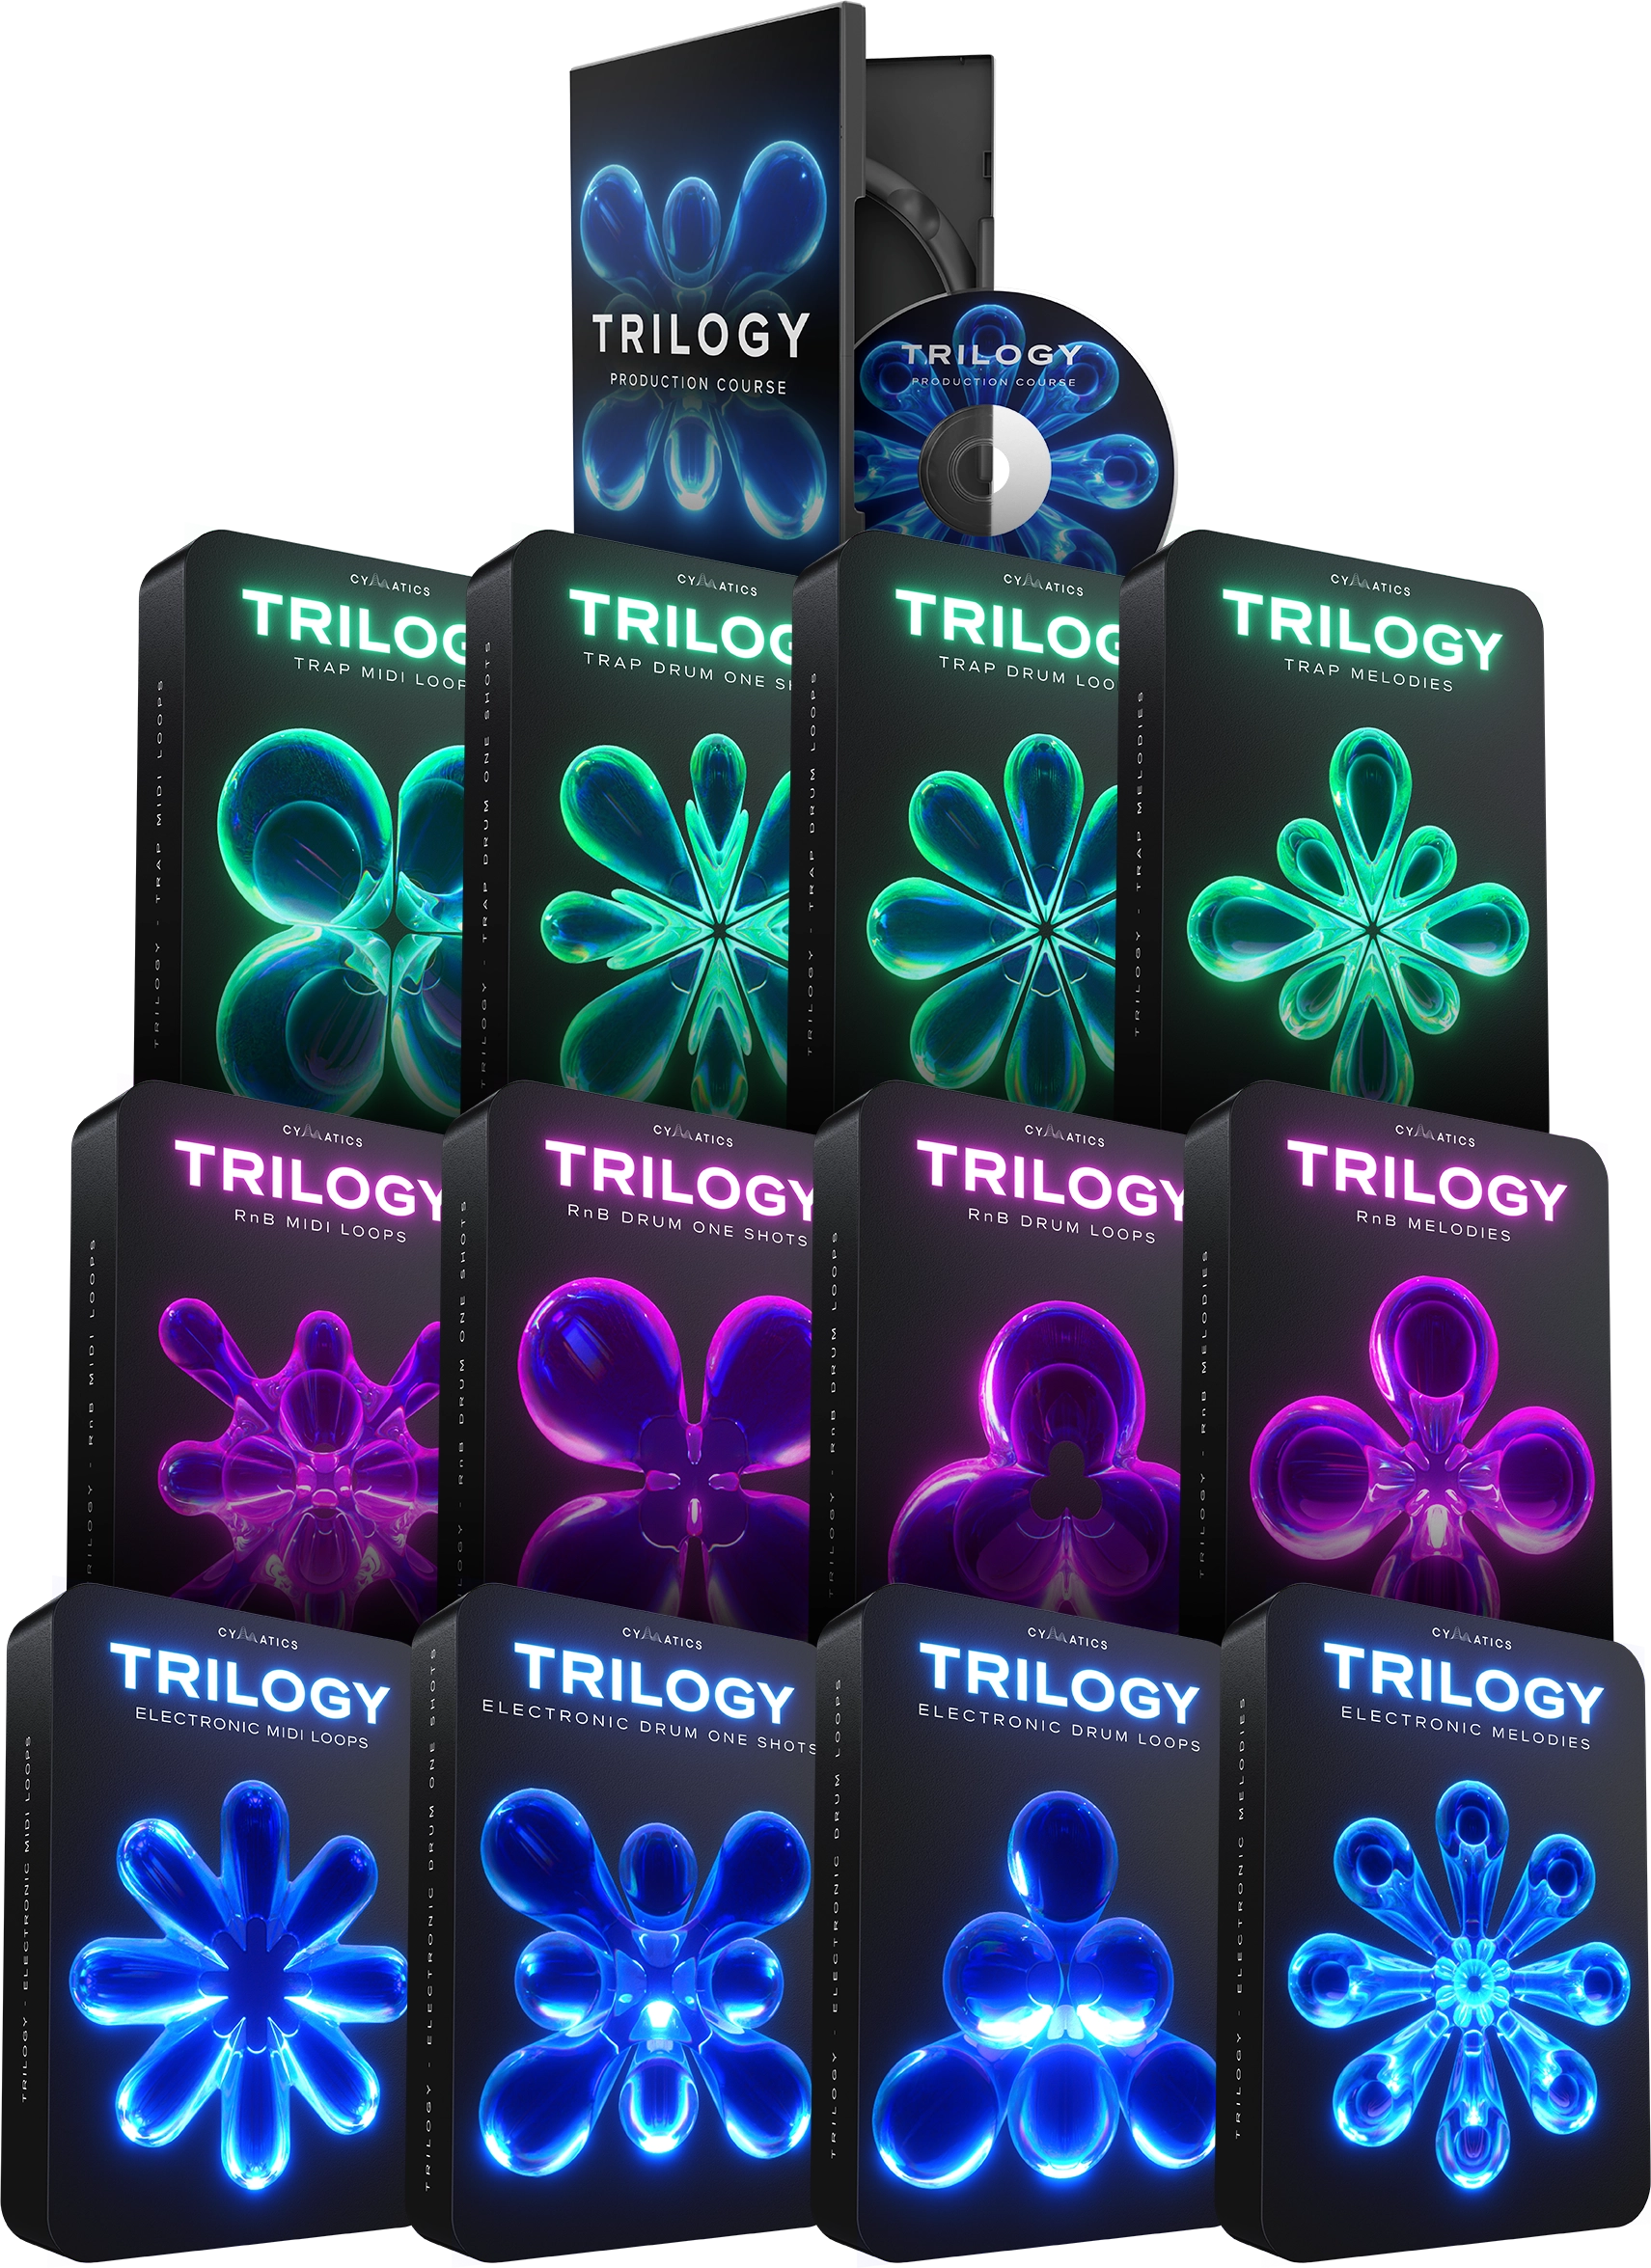 Trilogy Launch Edition Mobile